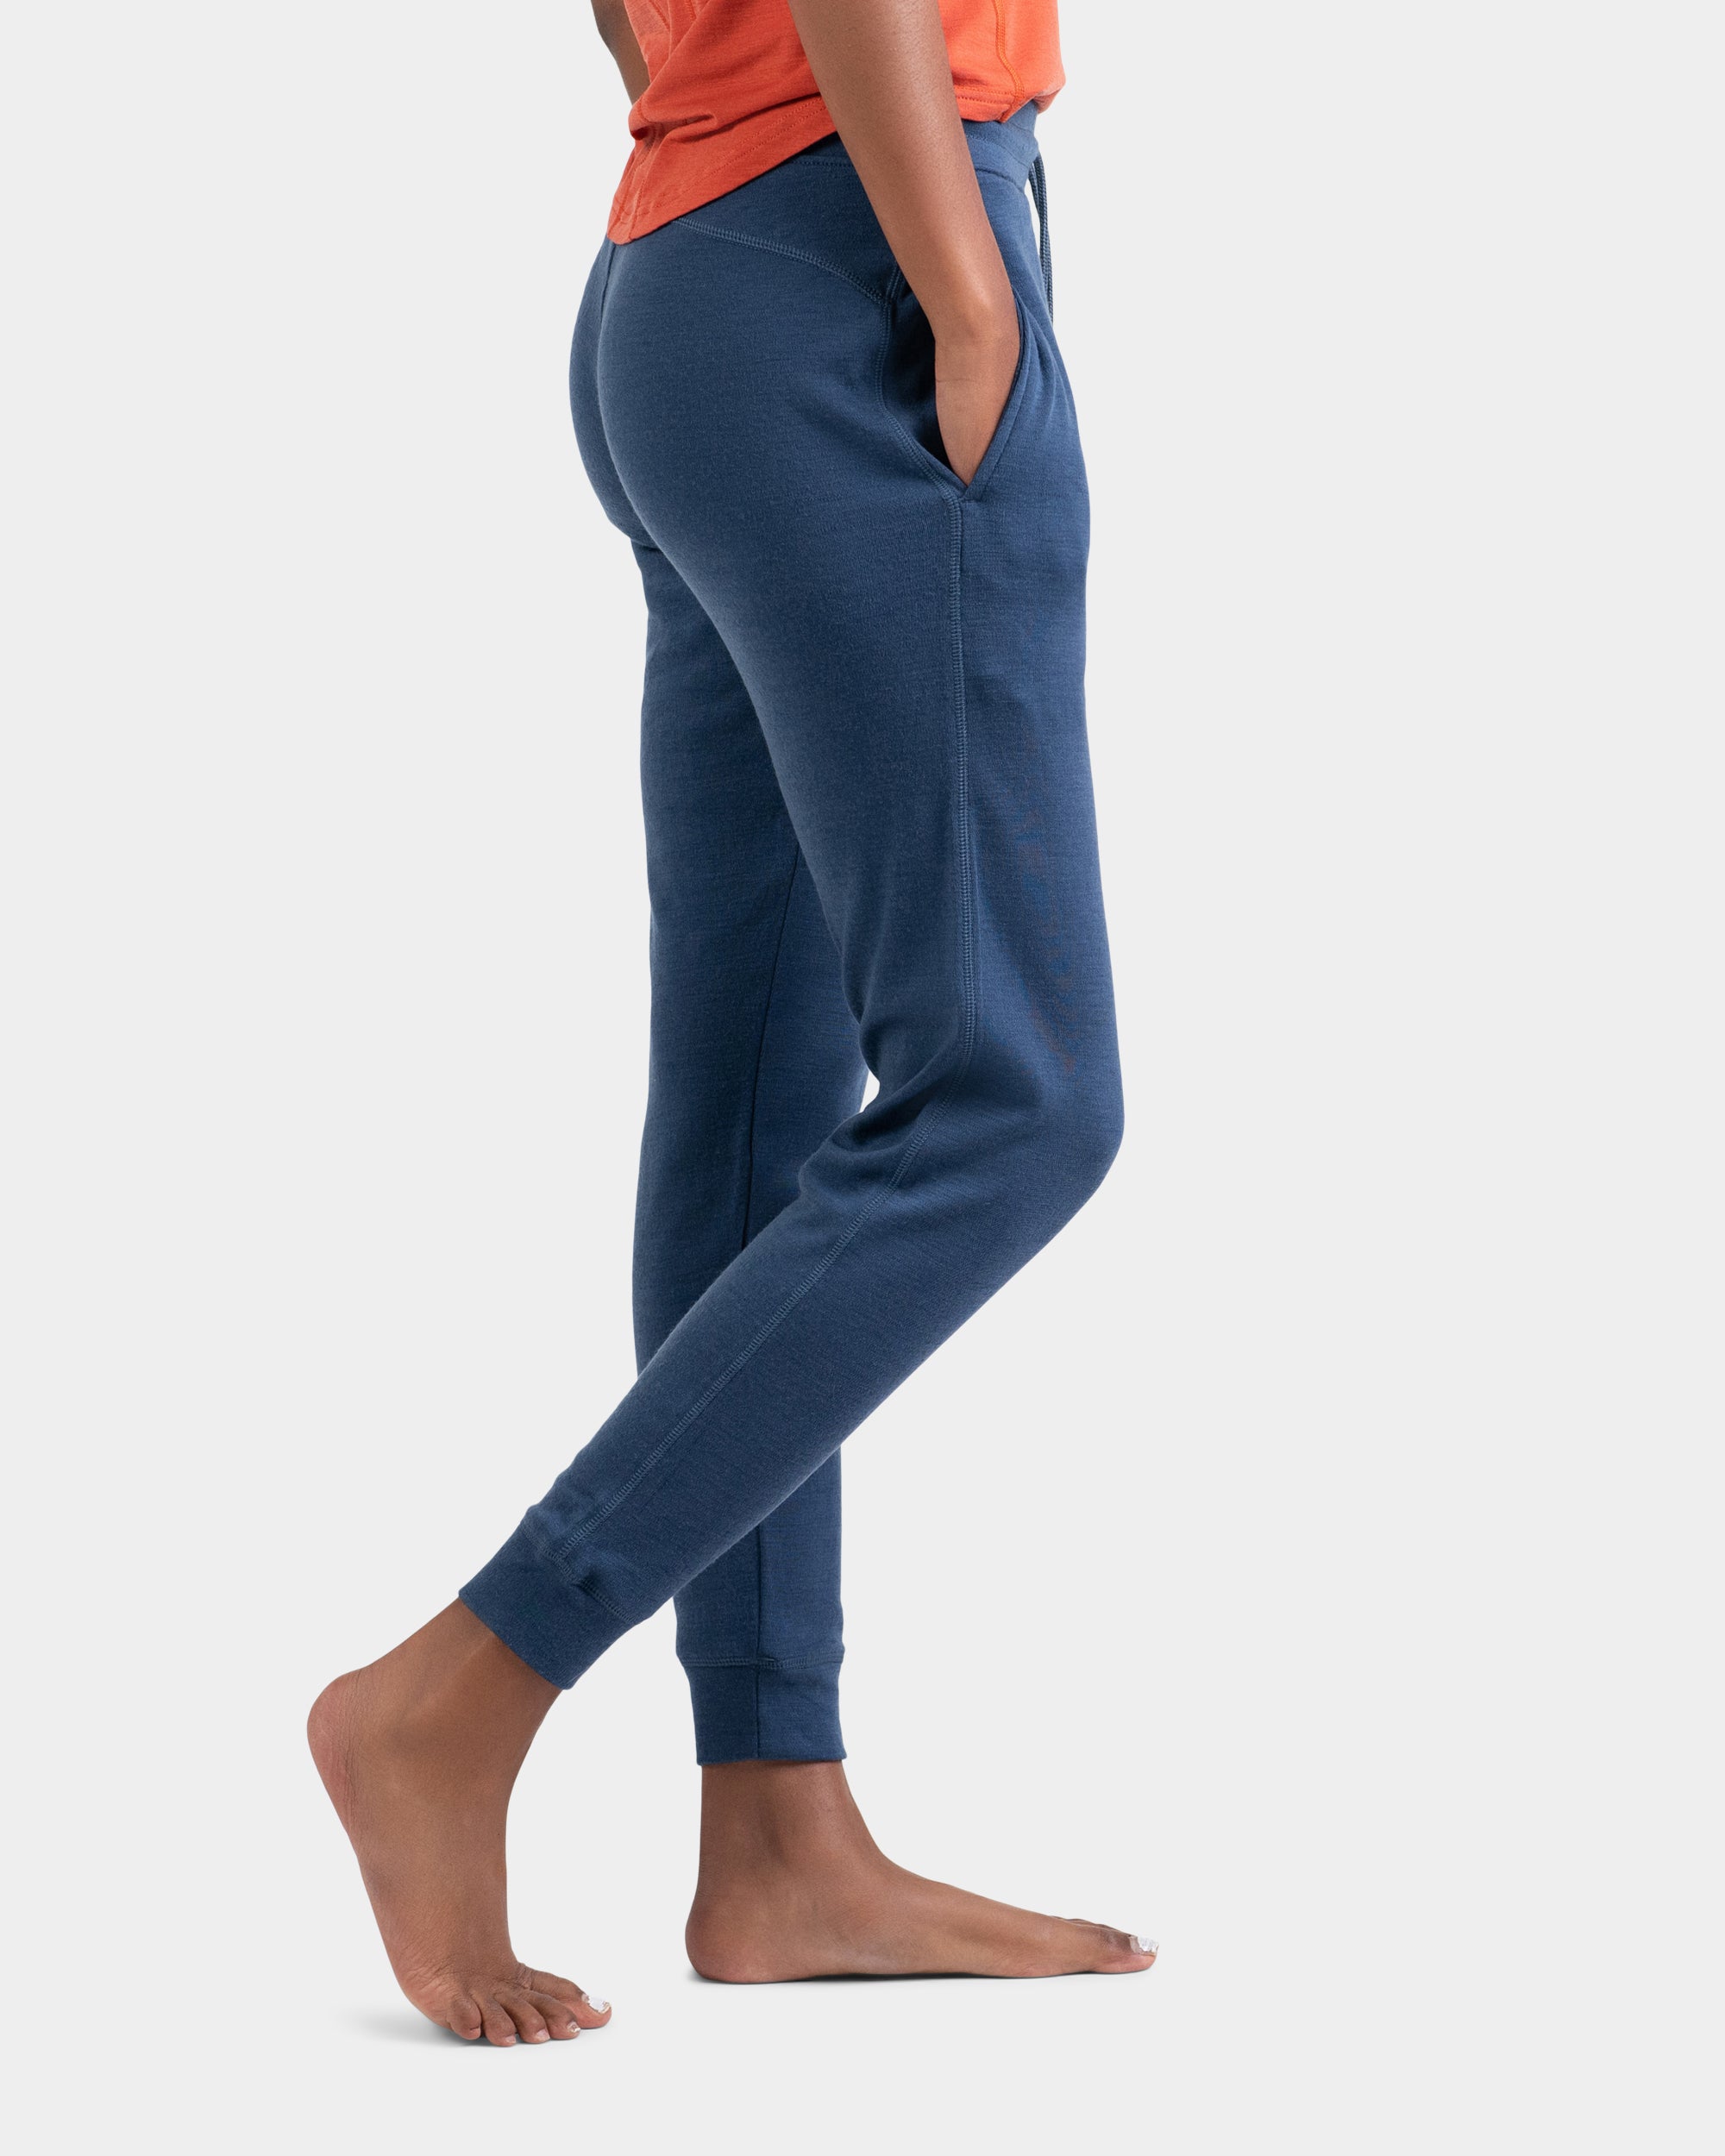 Merino Wool Sweatpants for Women Lounge Jogger Pants High Waist